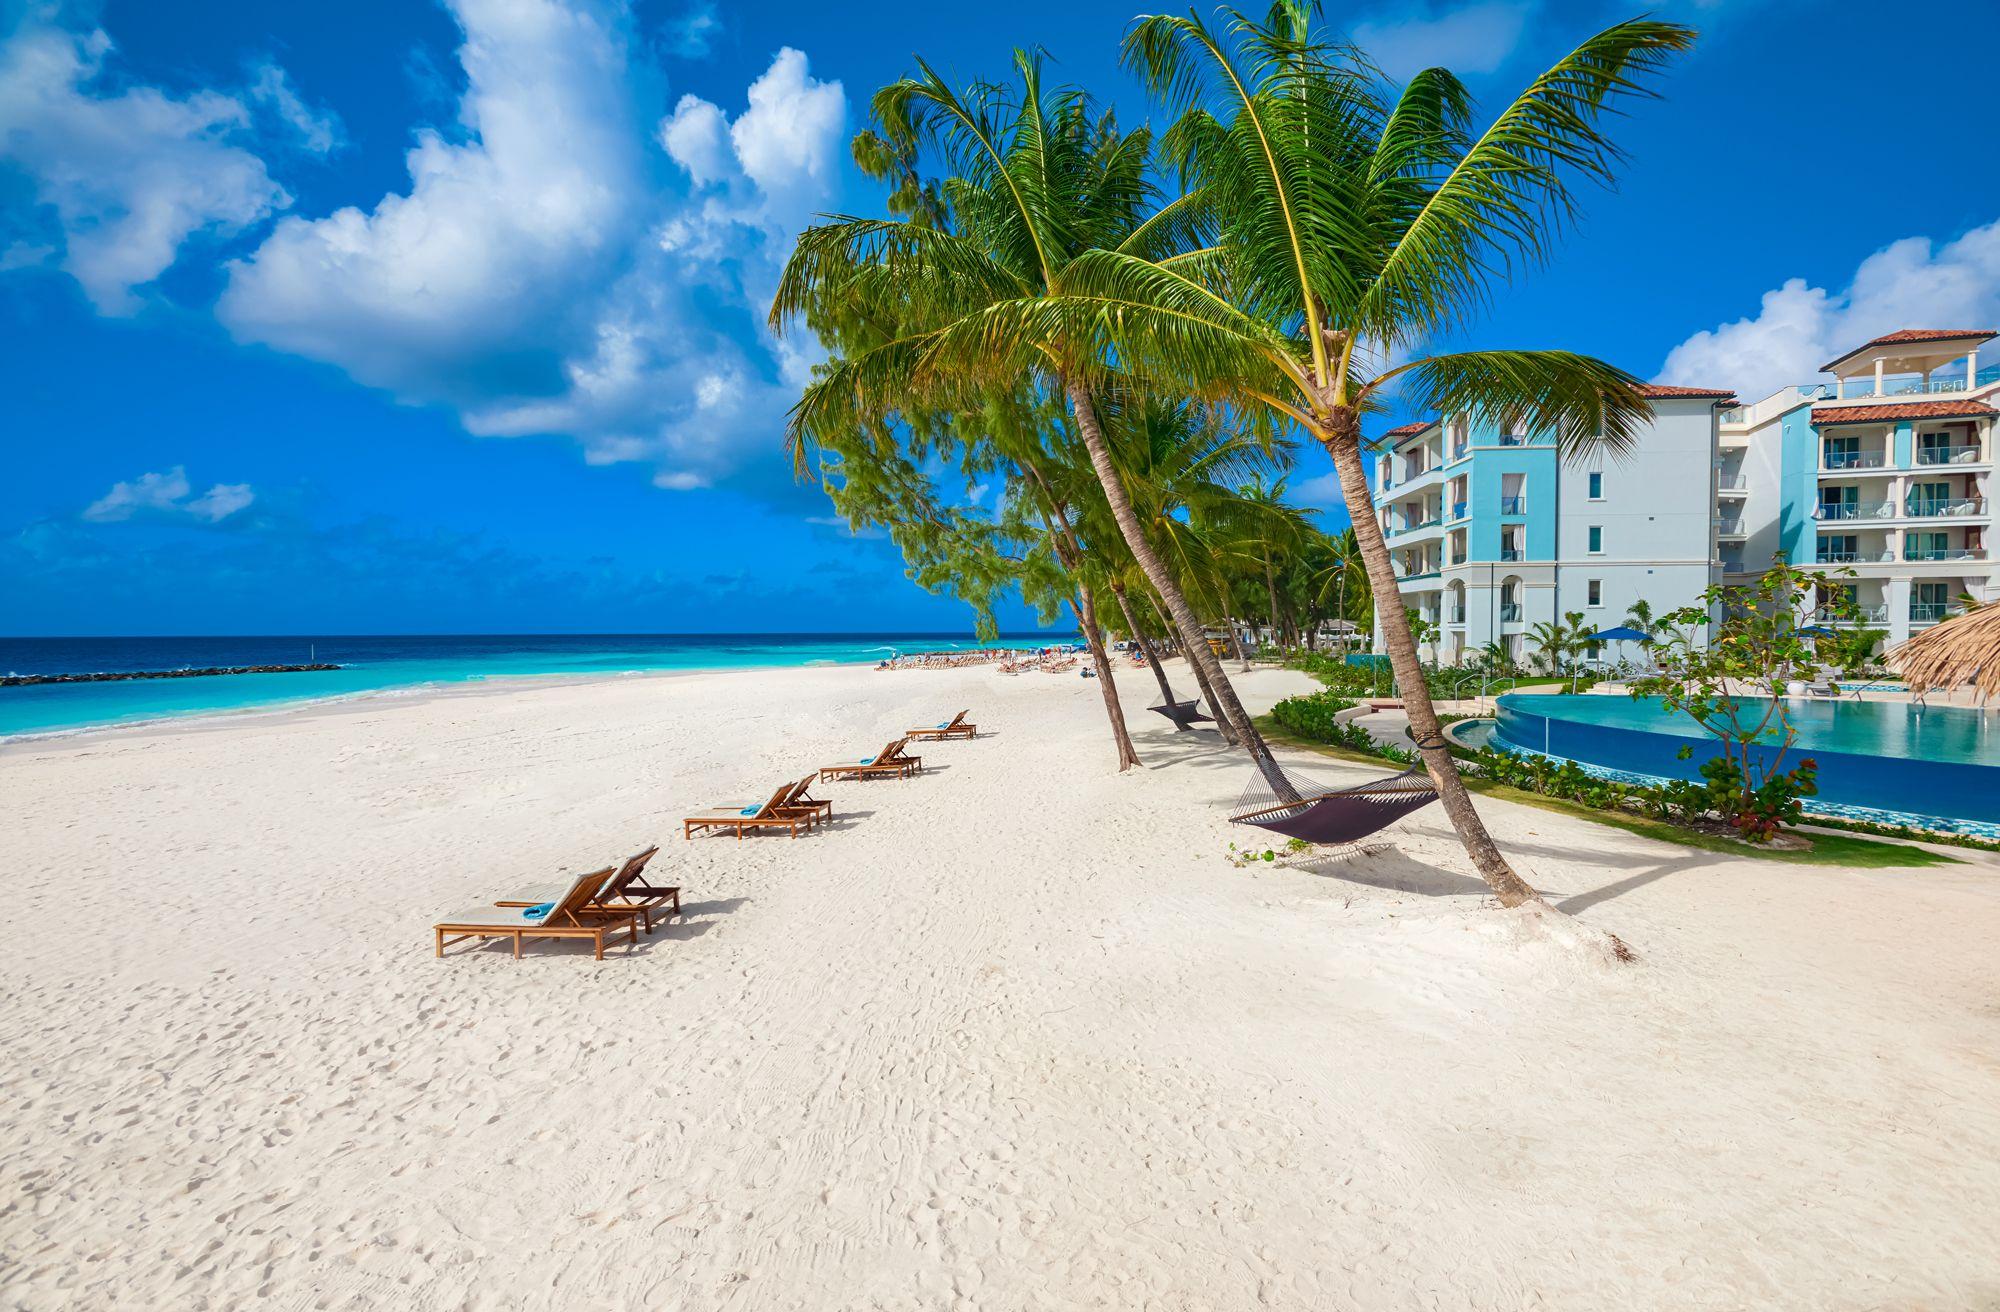 Barbados, suncem okupana zemlja